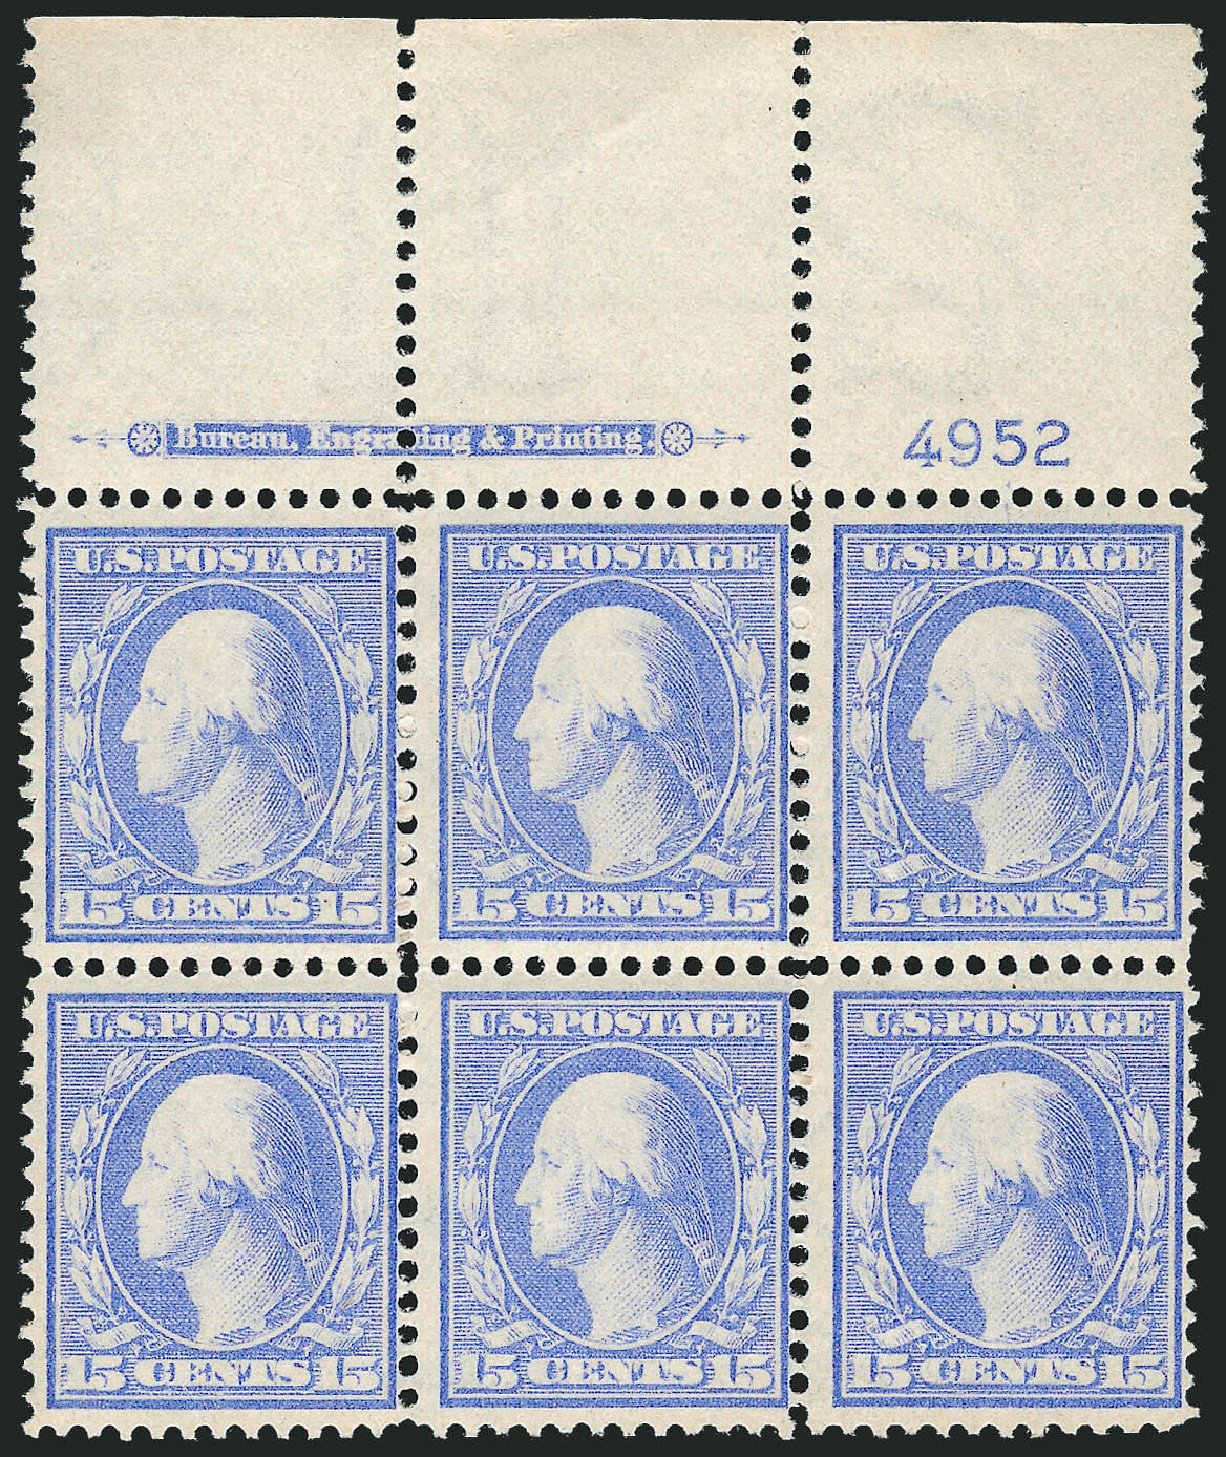 US Stamp Price Scott Cat. 340: 1909 15c Washington. Robert Siegel Auction Galleries, Jul 2014, Sale 1077, Lot 229